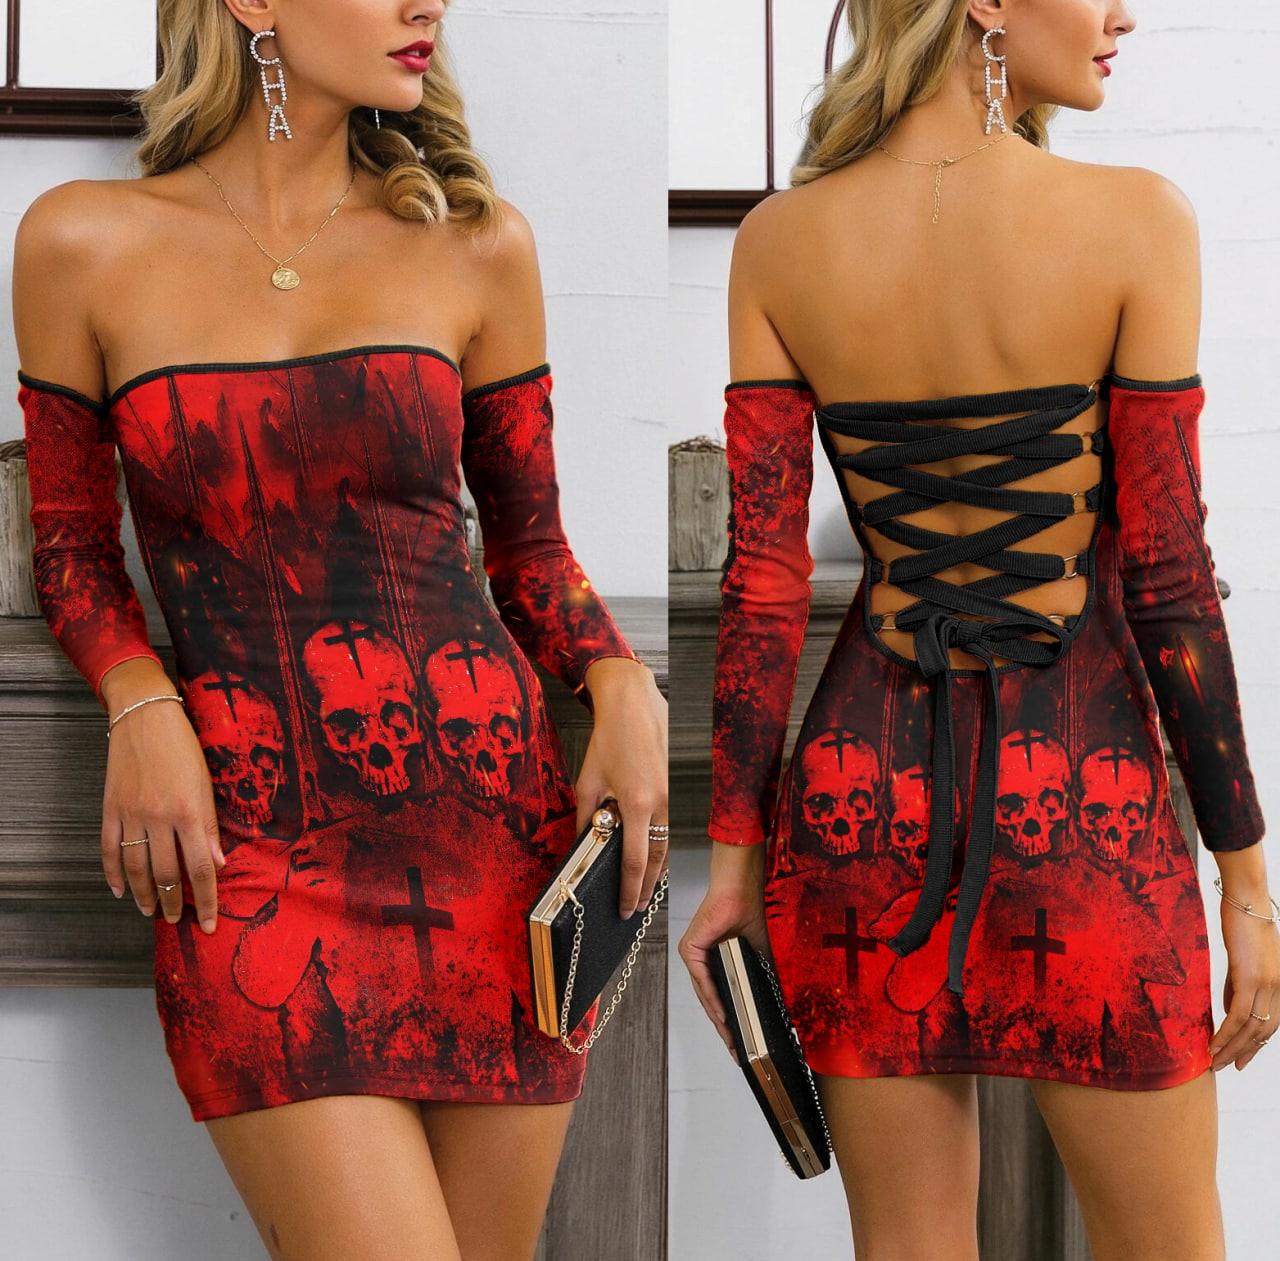 Red And Black Gothic Skull Demon Off-shoulder Dress, Hot Back Lace-up Clubwear For Women - Wonder Skull